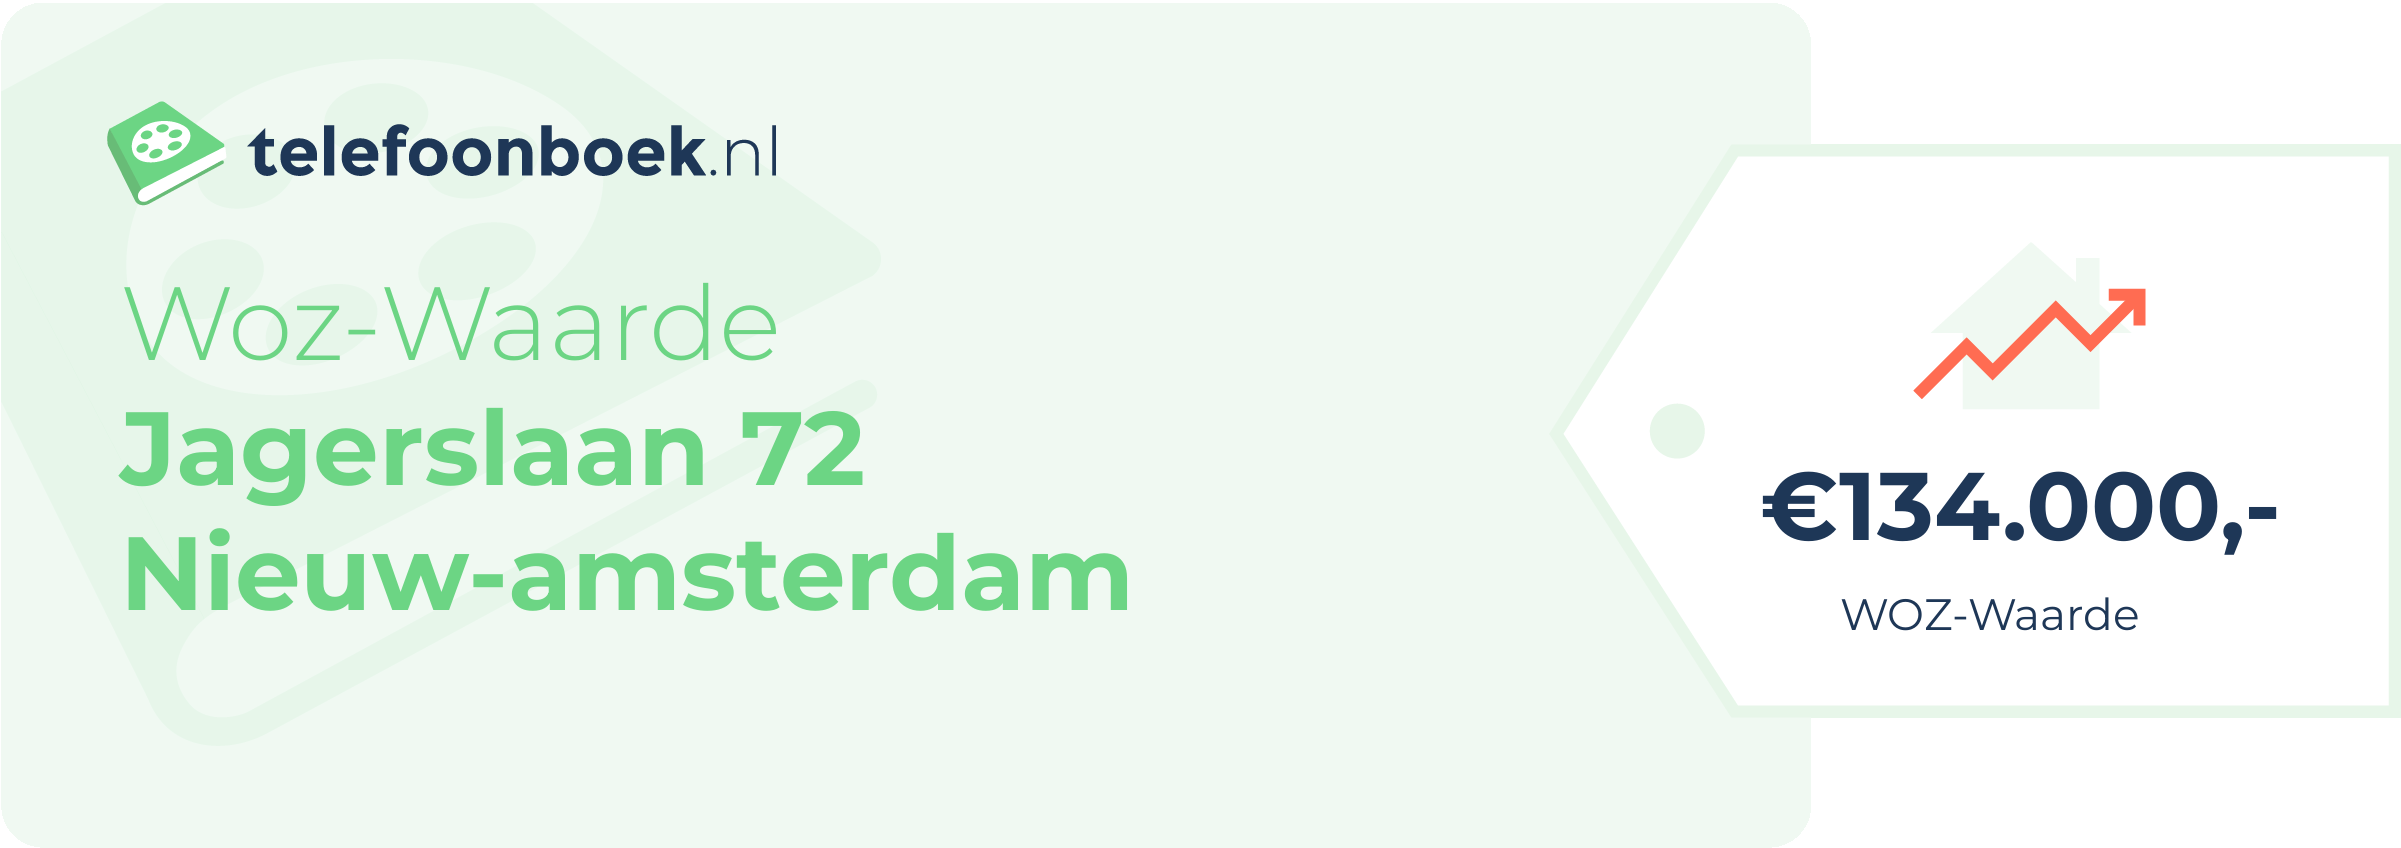 WOZ-waarde Jagerslaan 72 Nieuw-Amsterdam